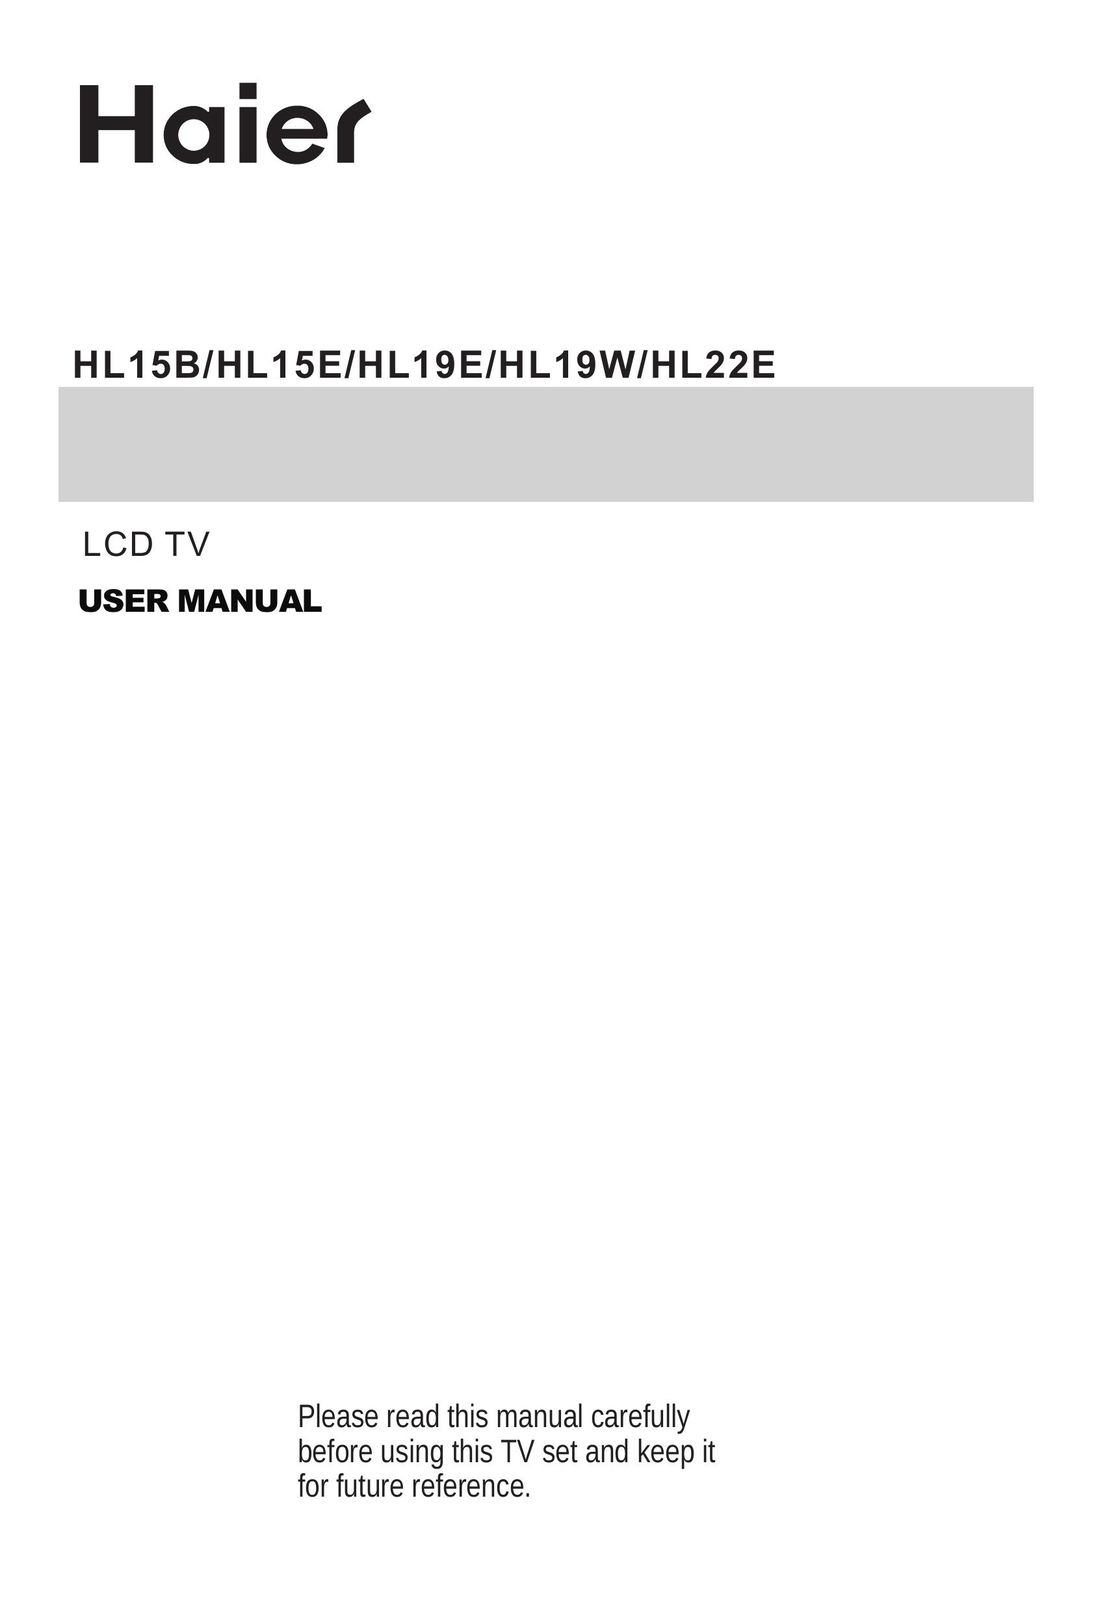 Haier HL19E Flat Panel Television User Manual